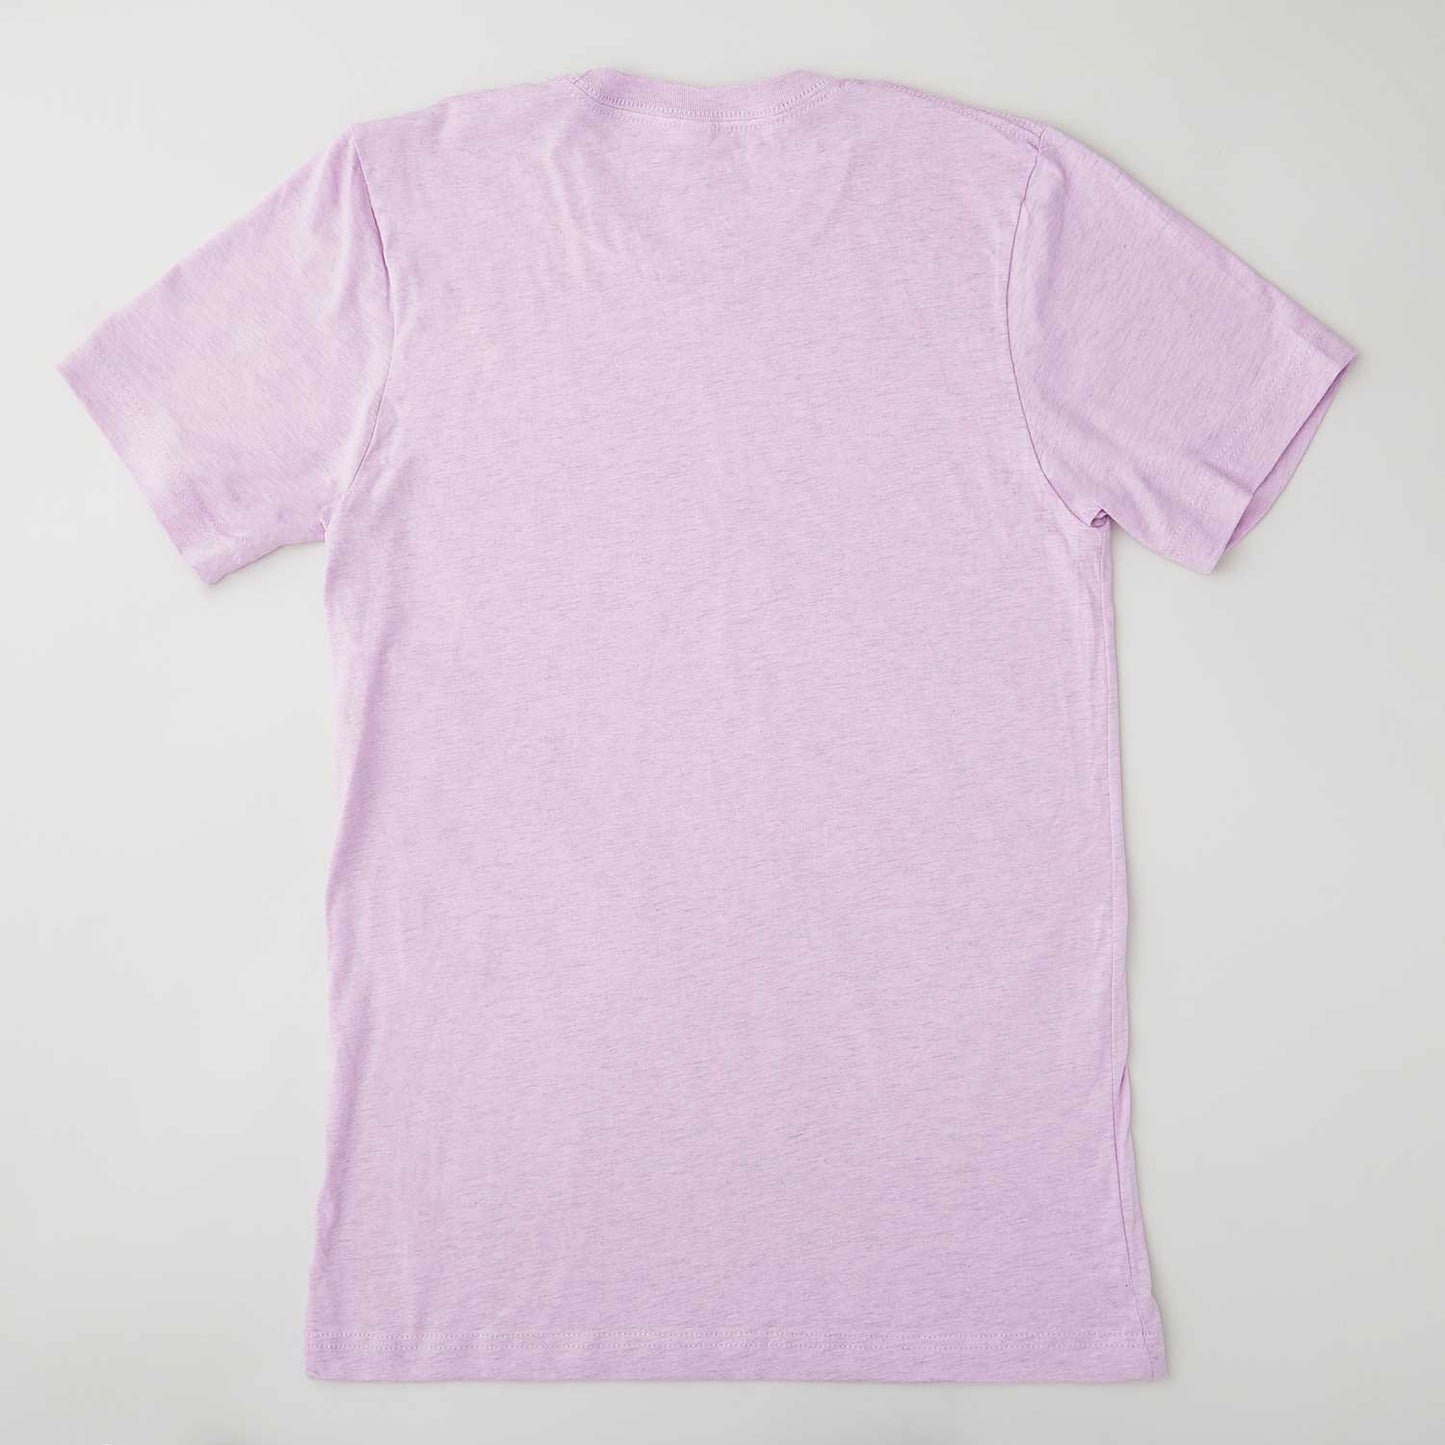 Quiltmaker T-shirt - Heather Prism Lilac - 4XL Alternative View #1